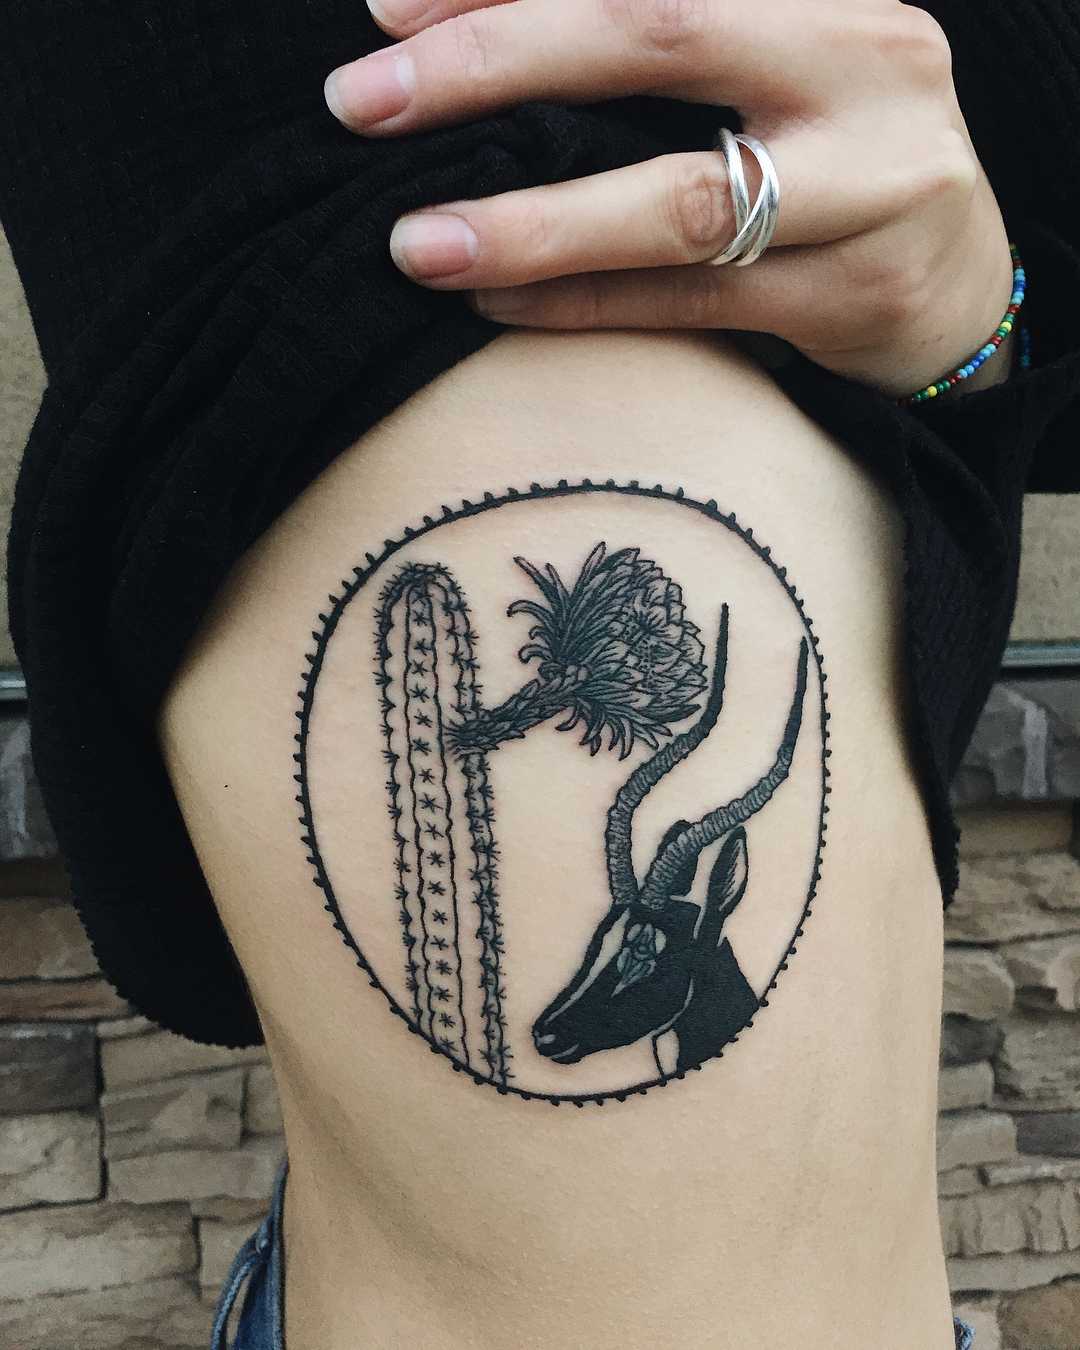 Cactus and antelope tattoo